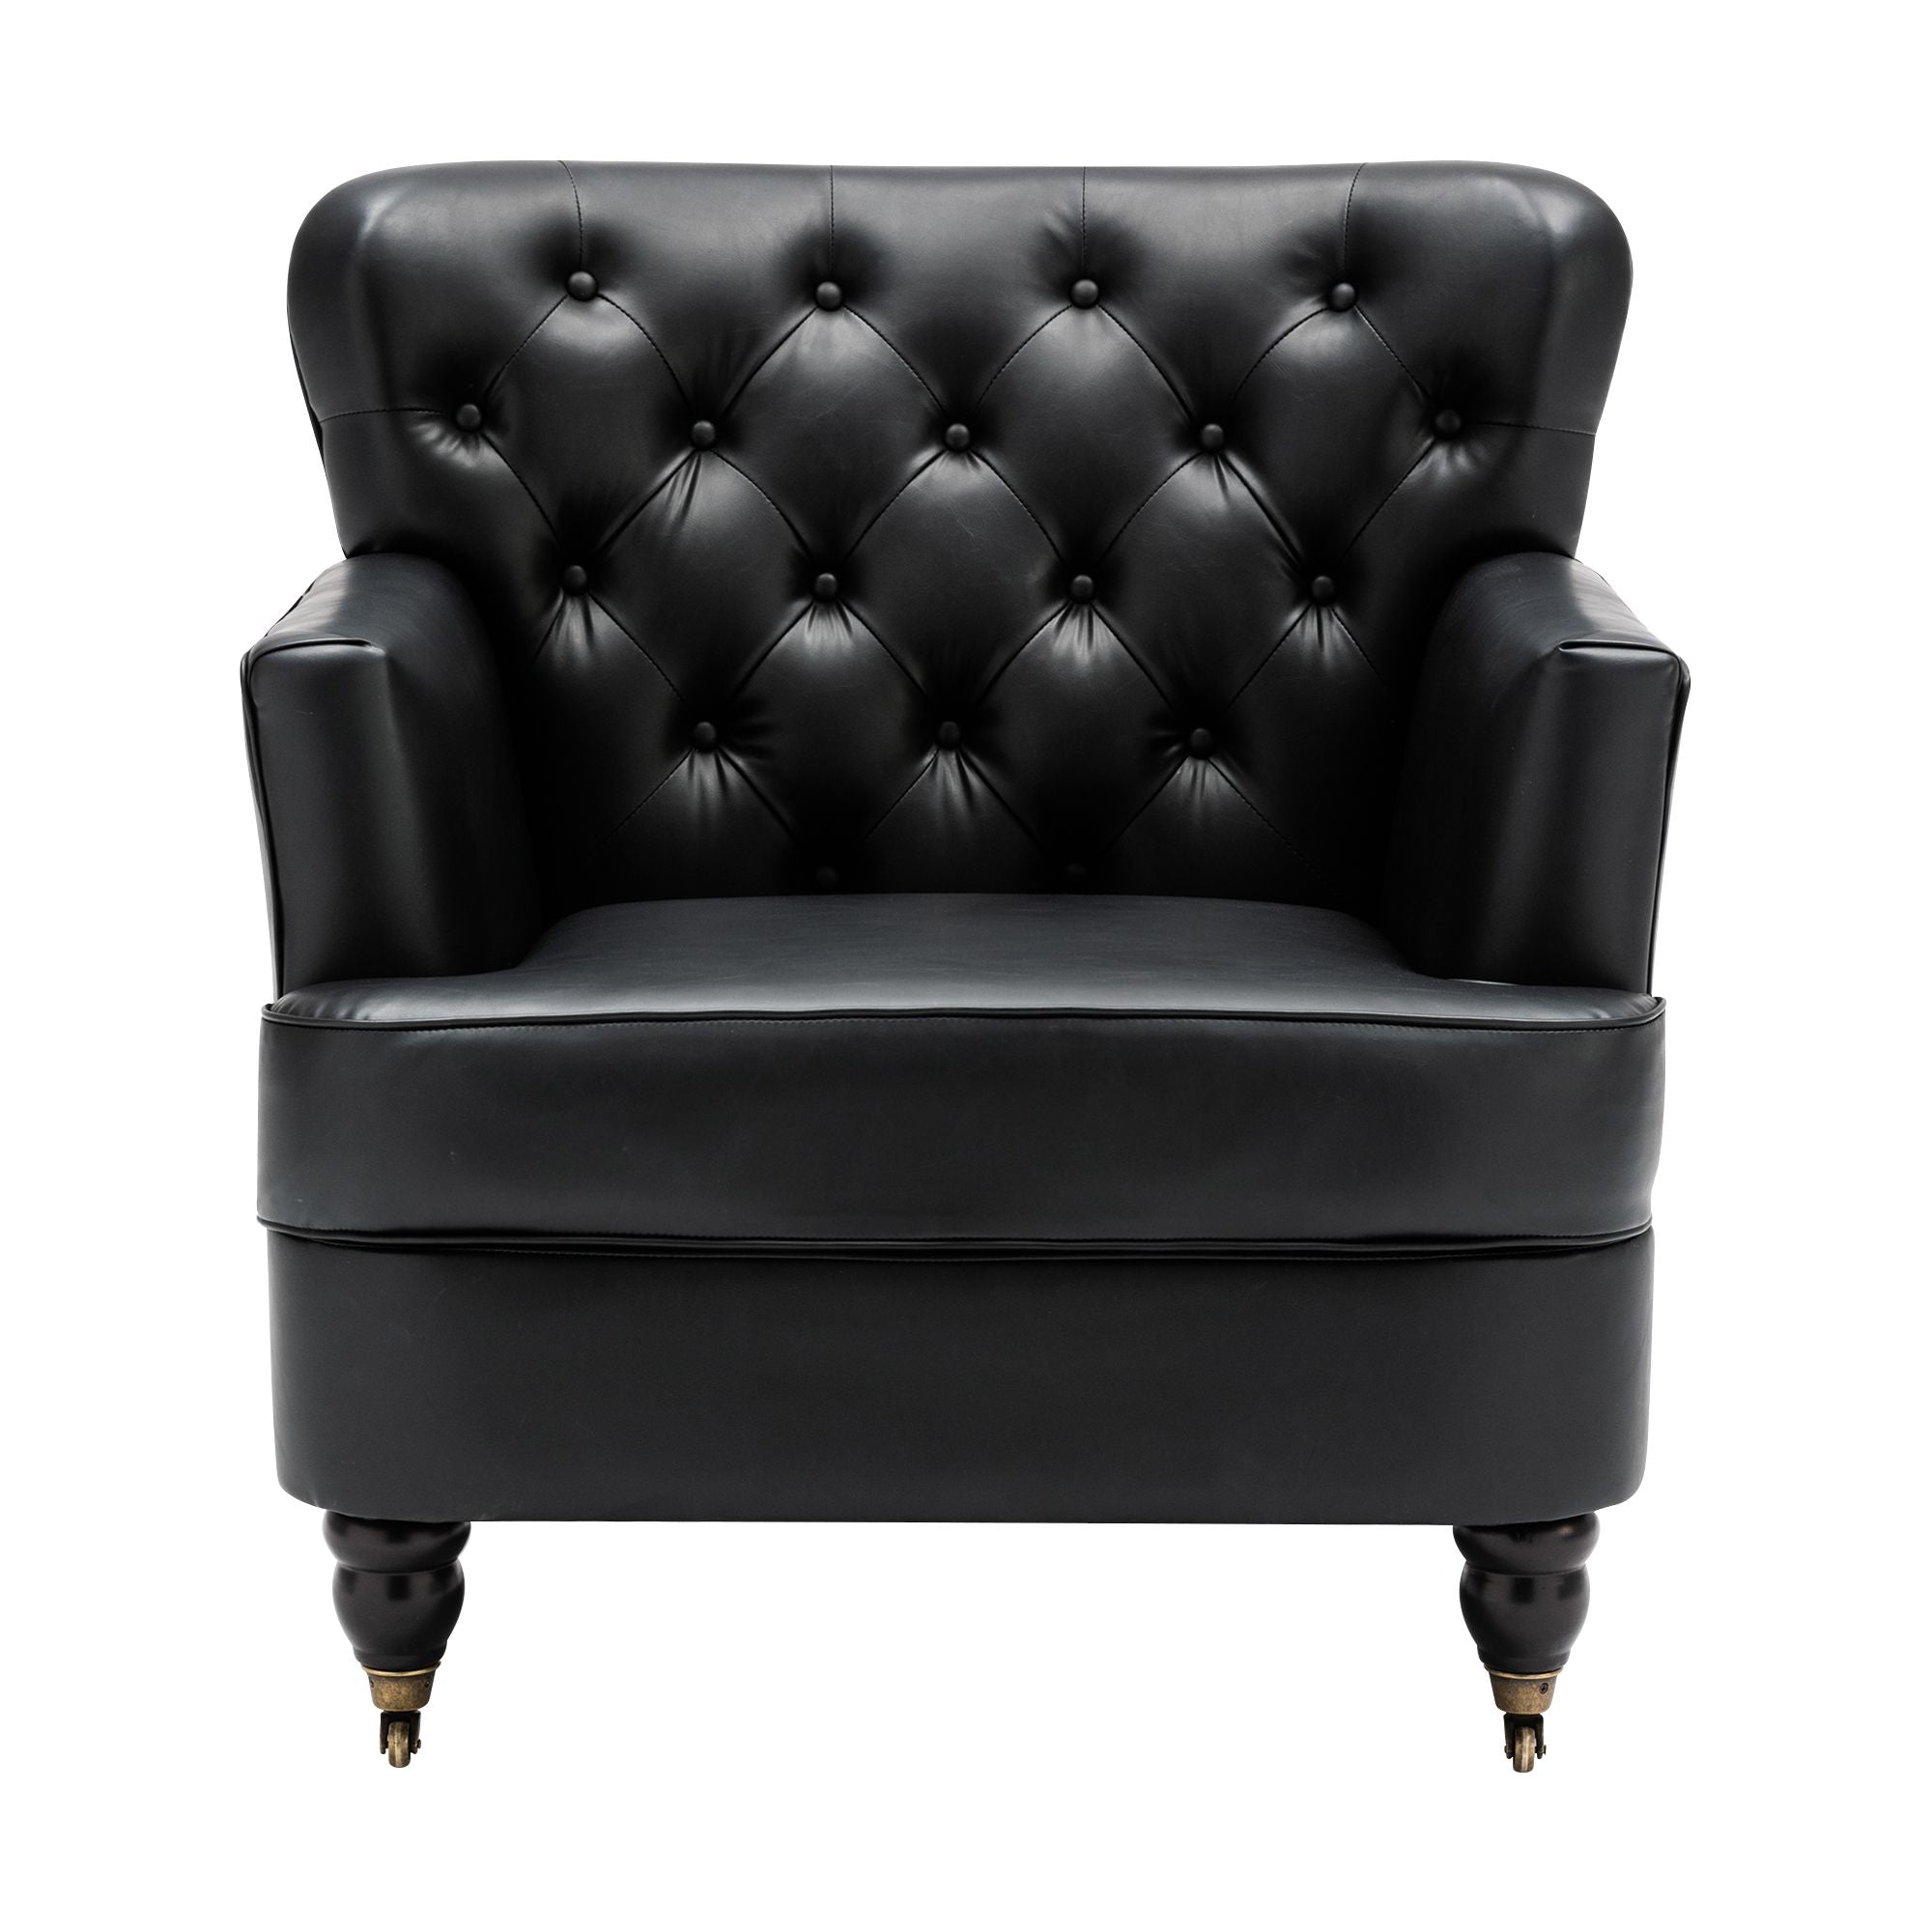 PU leather club chair, black